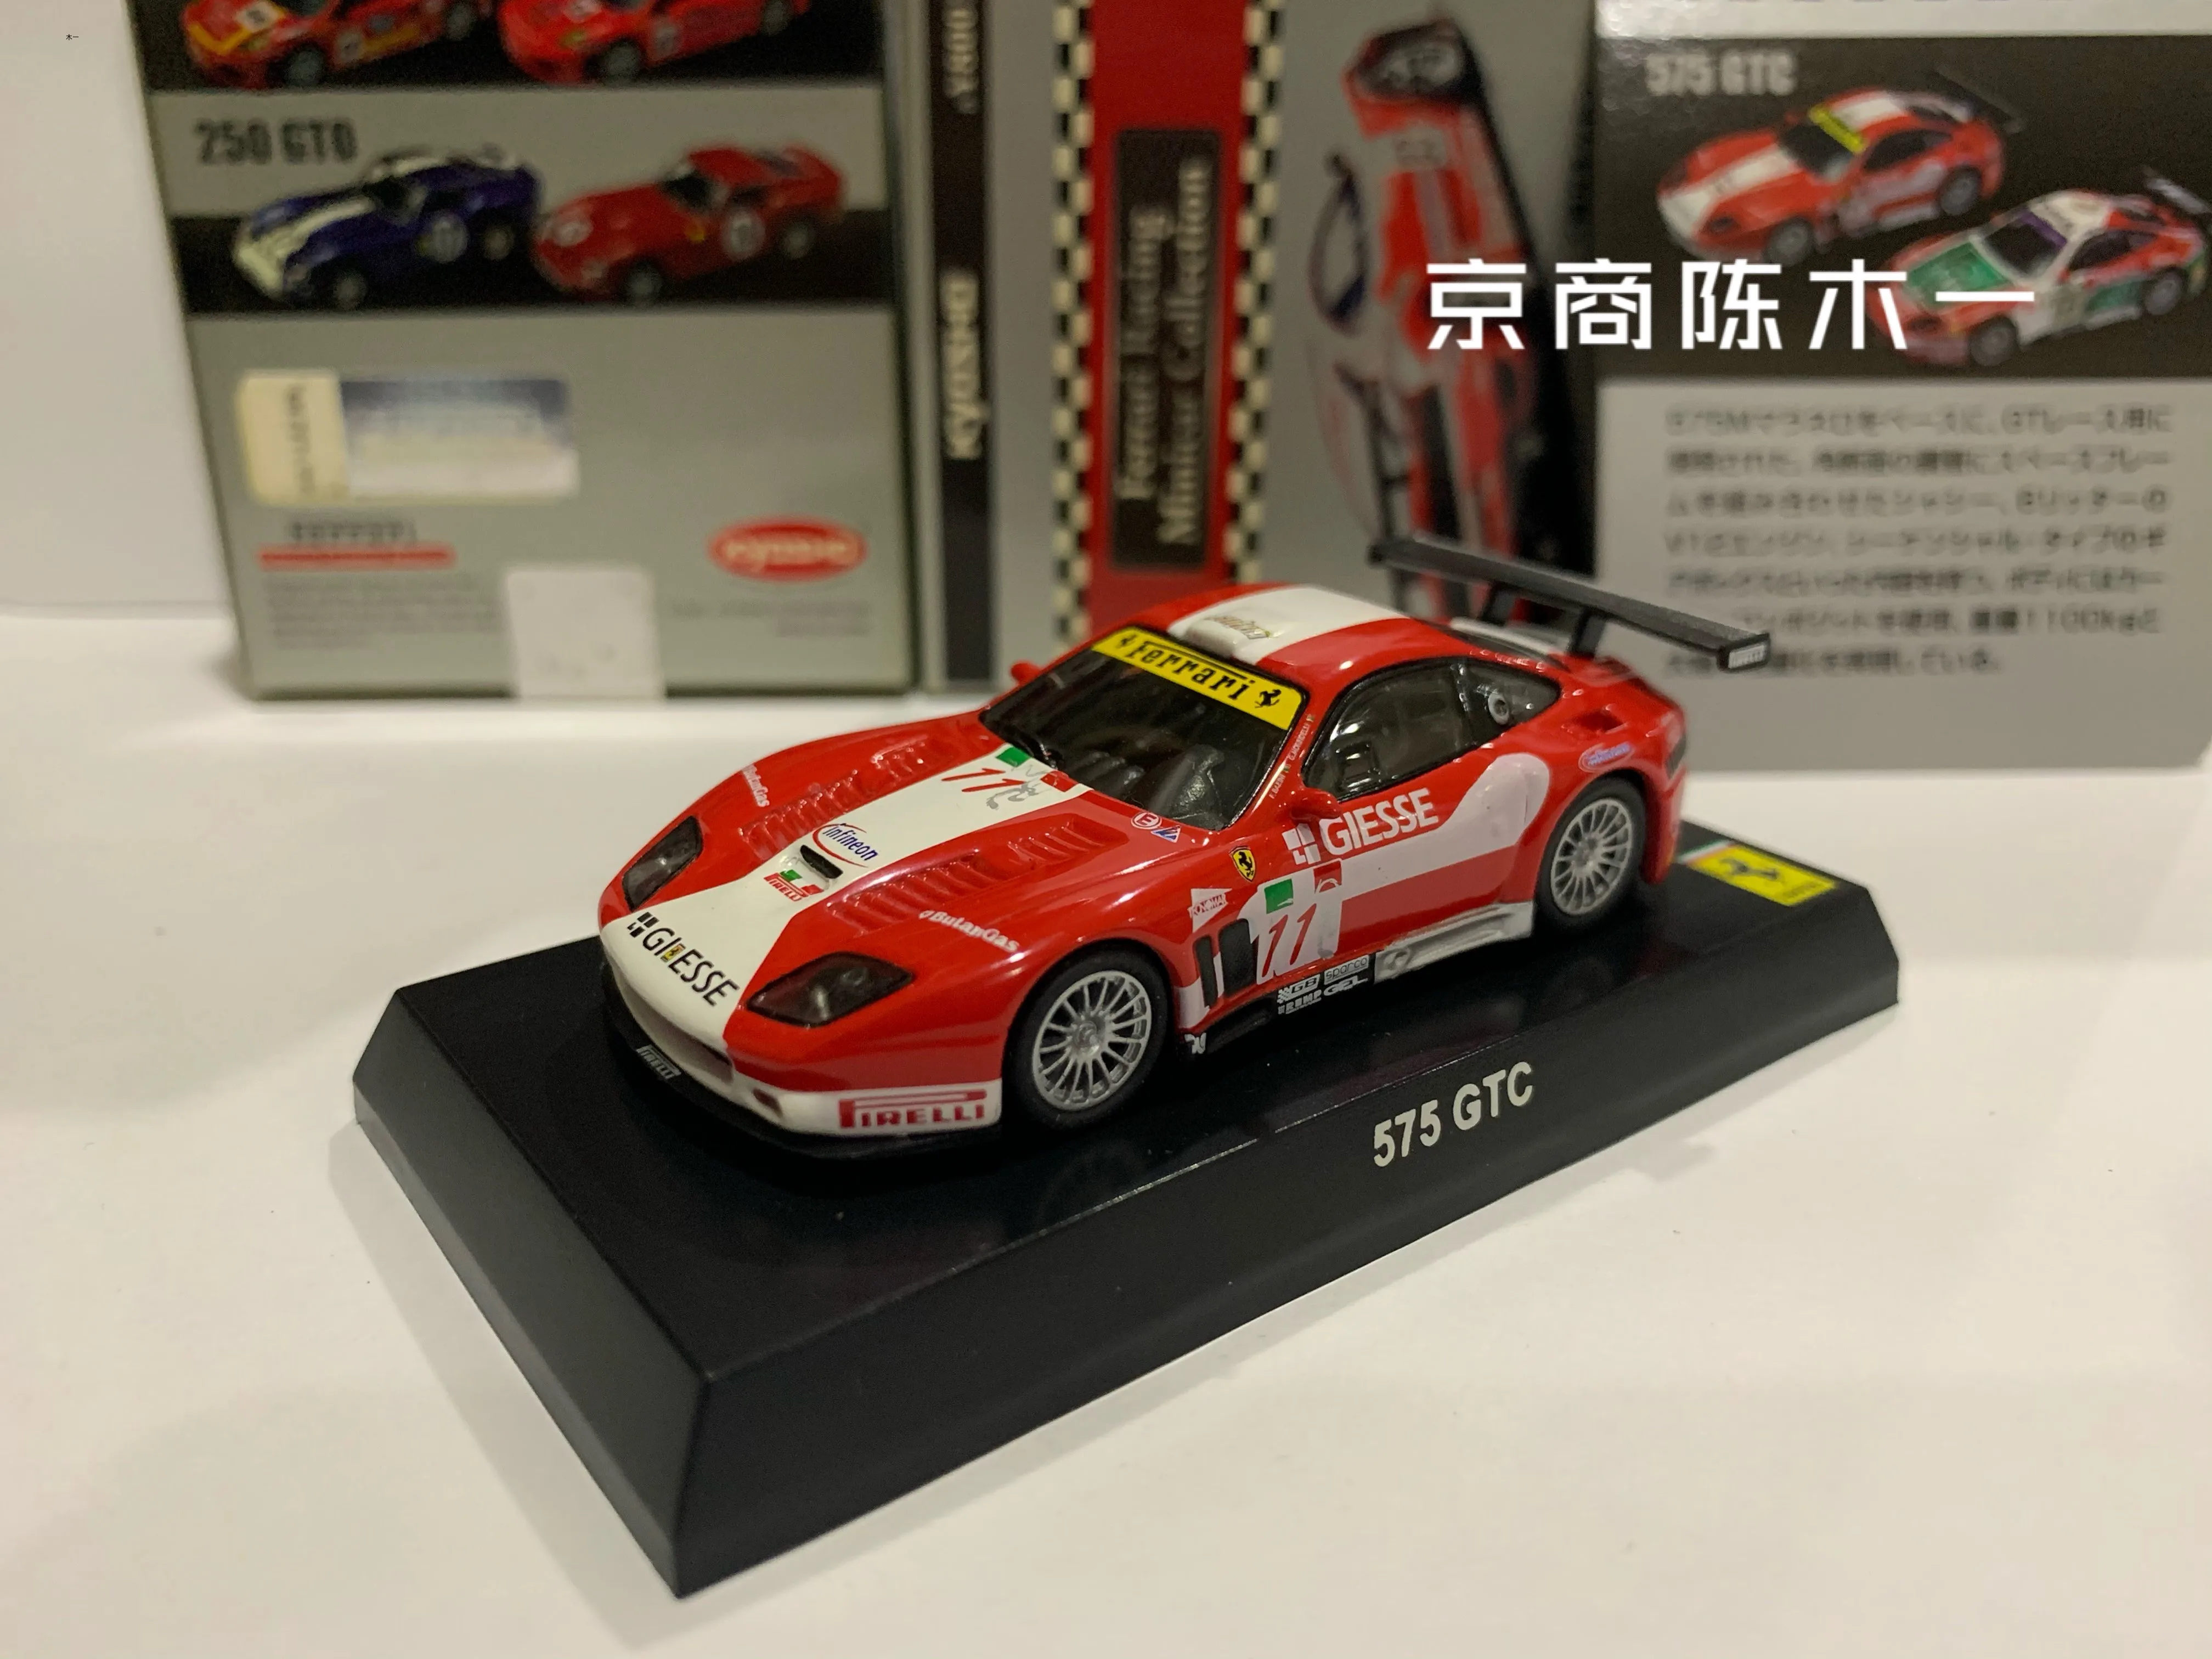 1/64 KYOSHO Ferrari 575 GTC  # 11 Collection  die-cast alloy car decoration model toys